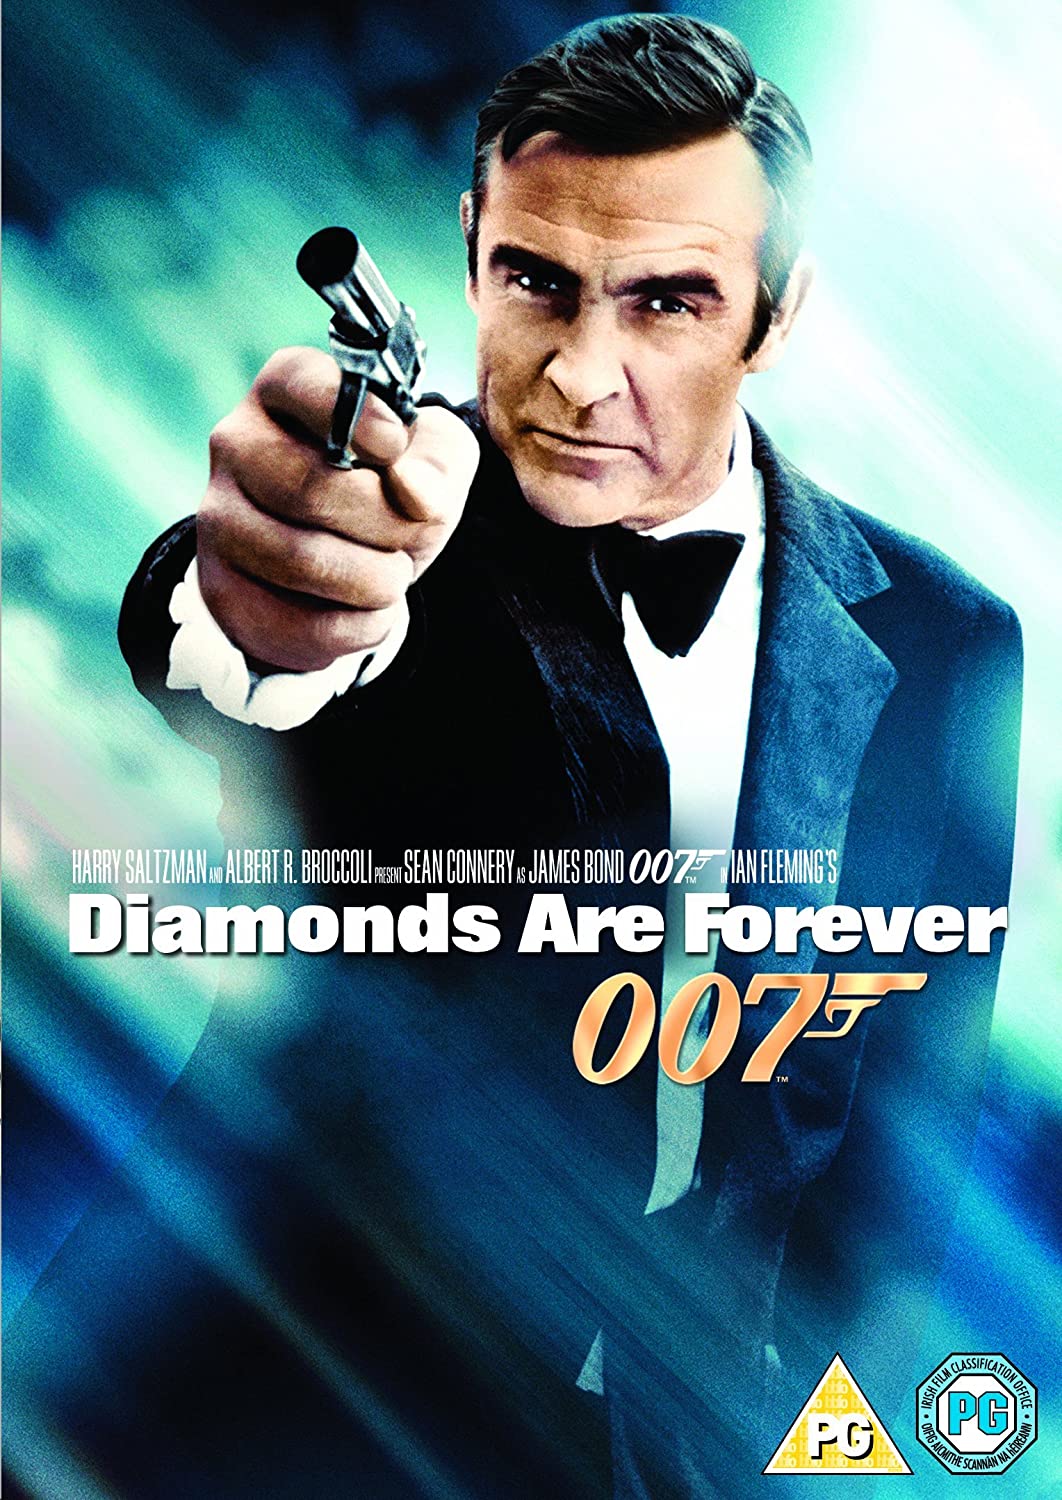 Diamonds Are Forever [1971] - Action/Thriler [DVD]